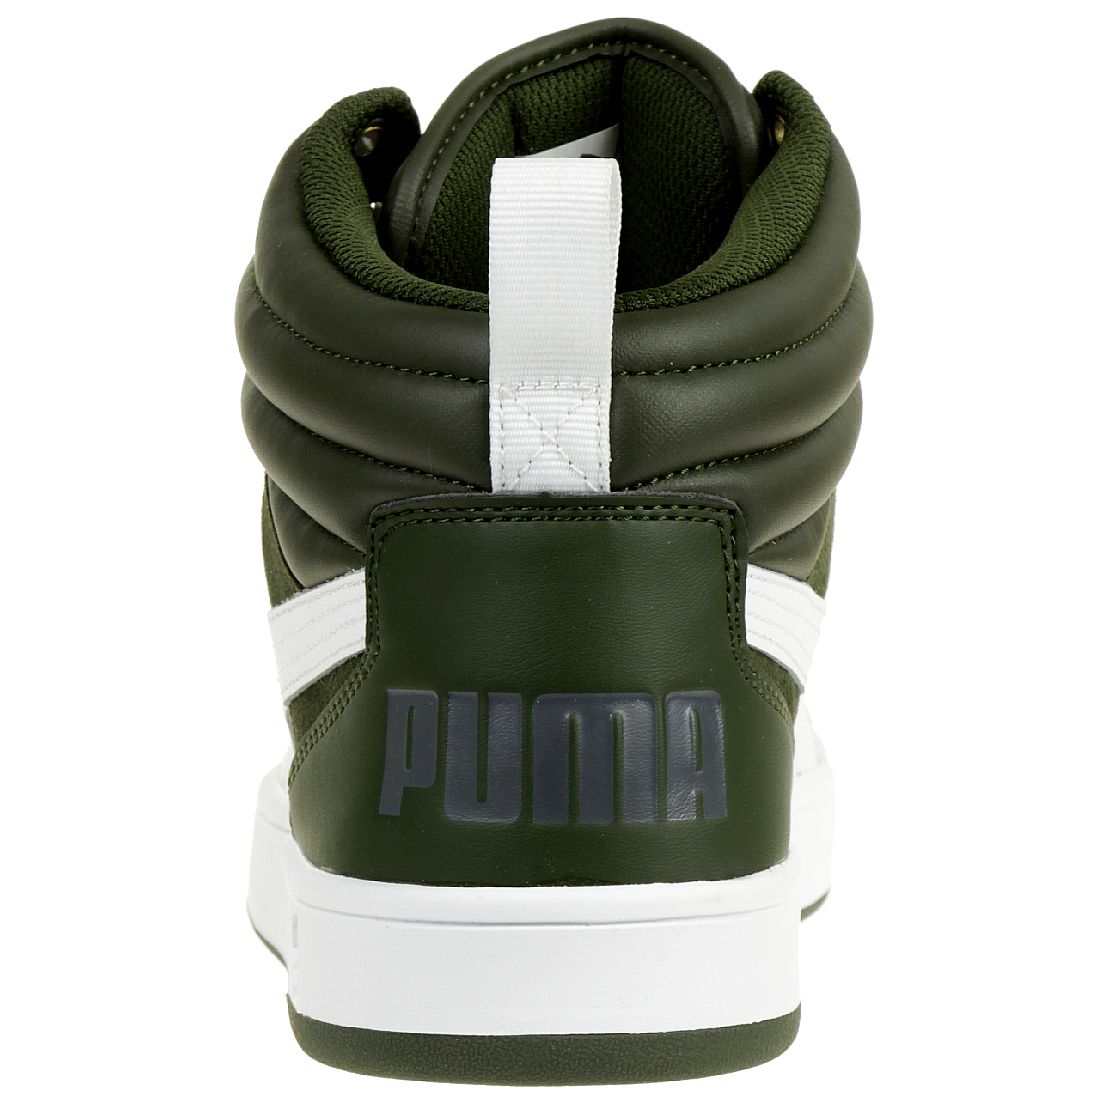 Puma Rebound Street V2 Sneaker Herren Schuhe grün  363715 09